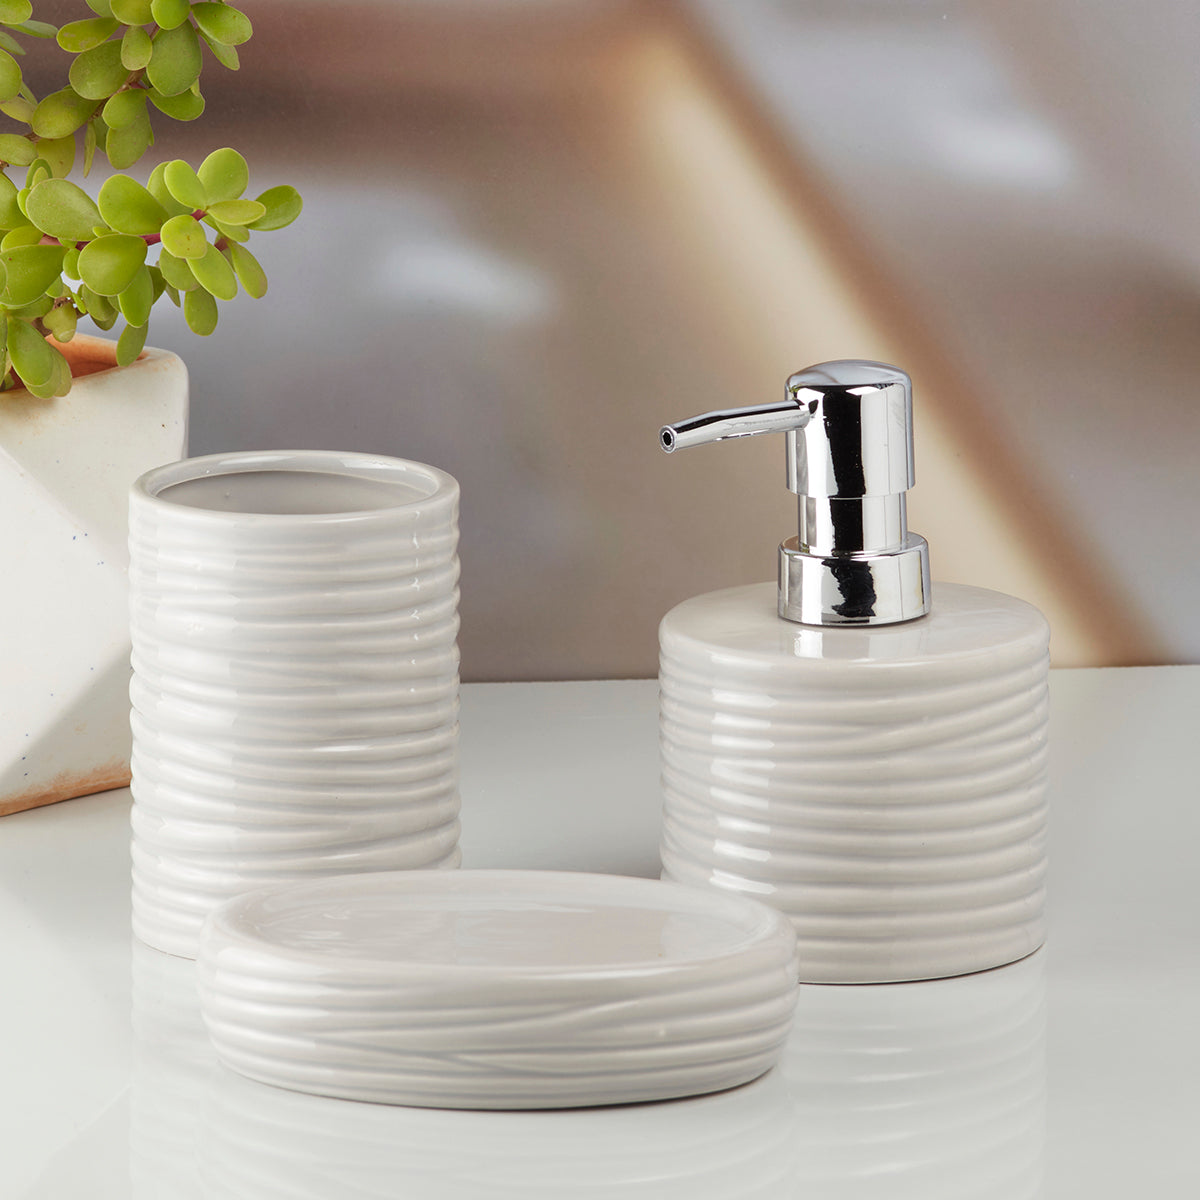 Ceramic Bathroom Accessories Set of 3 Bath Set with Soap Dispenser (10198)